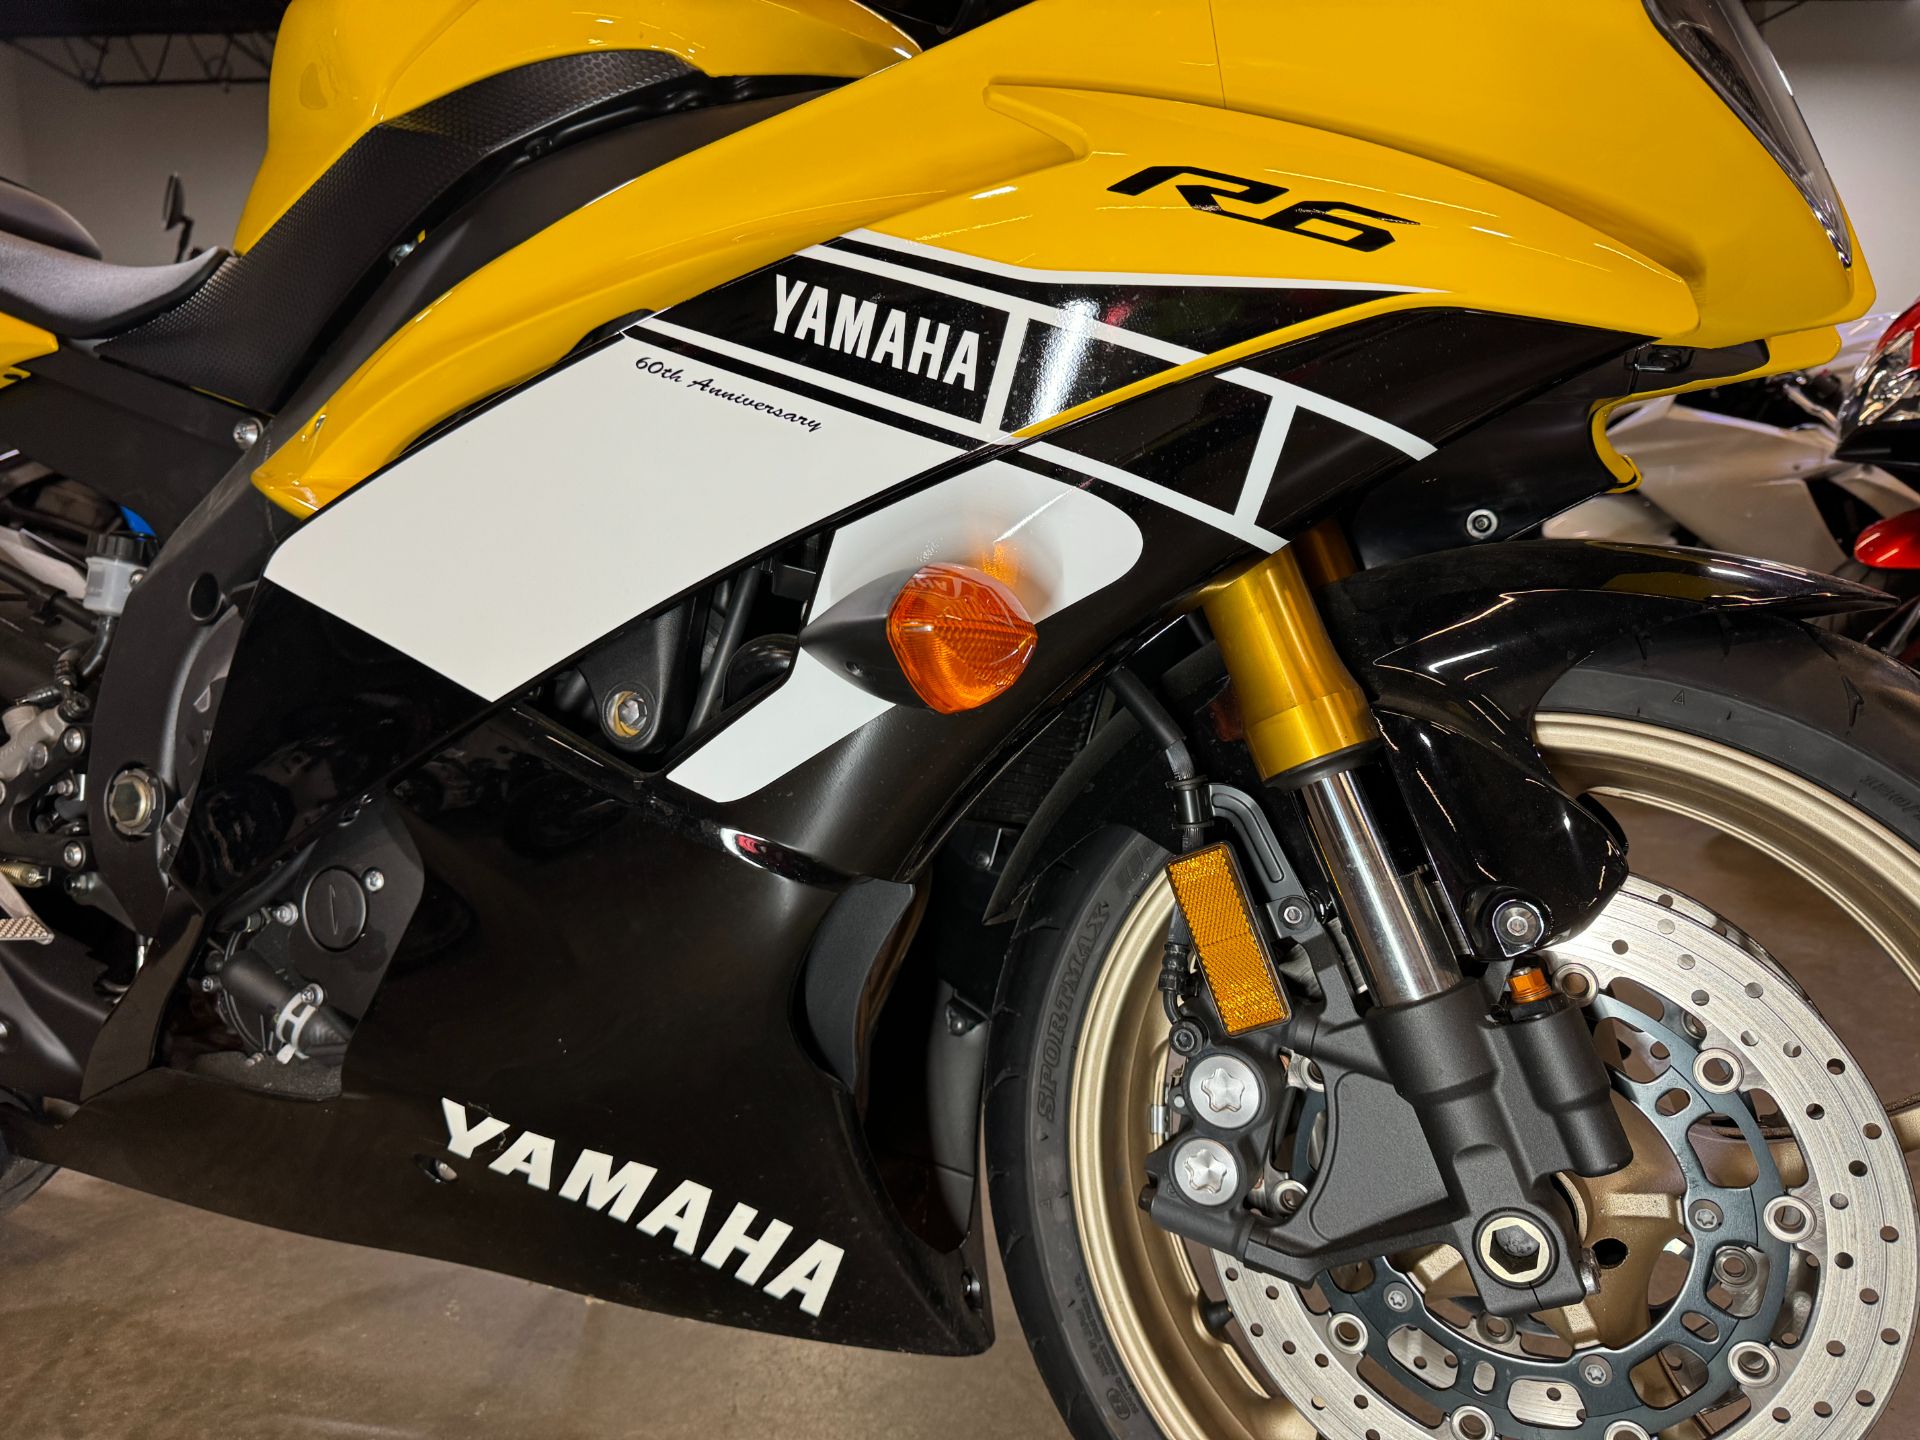 2016 Yamaha YZF-R6 in Eden Prairie, Minnesota - Photo 3